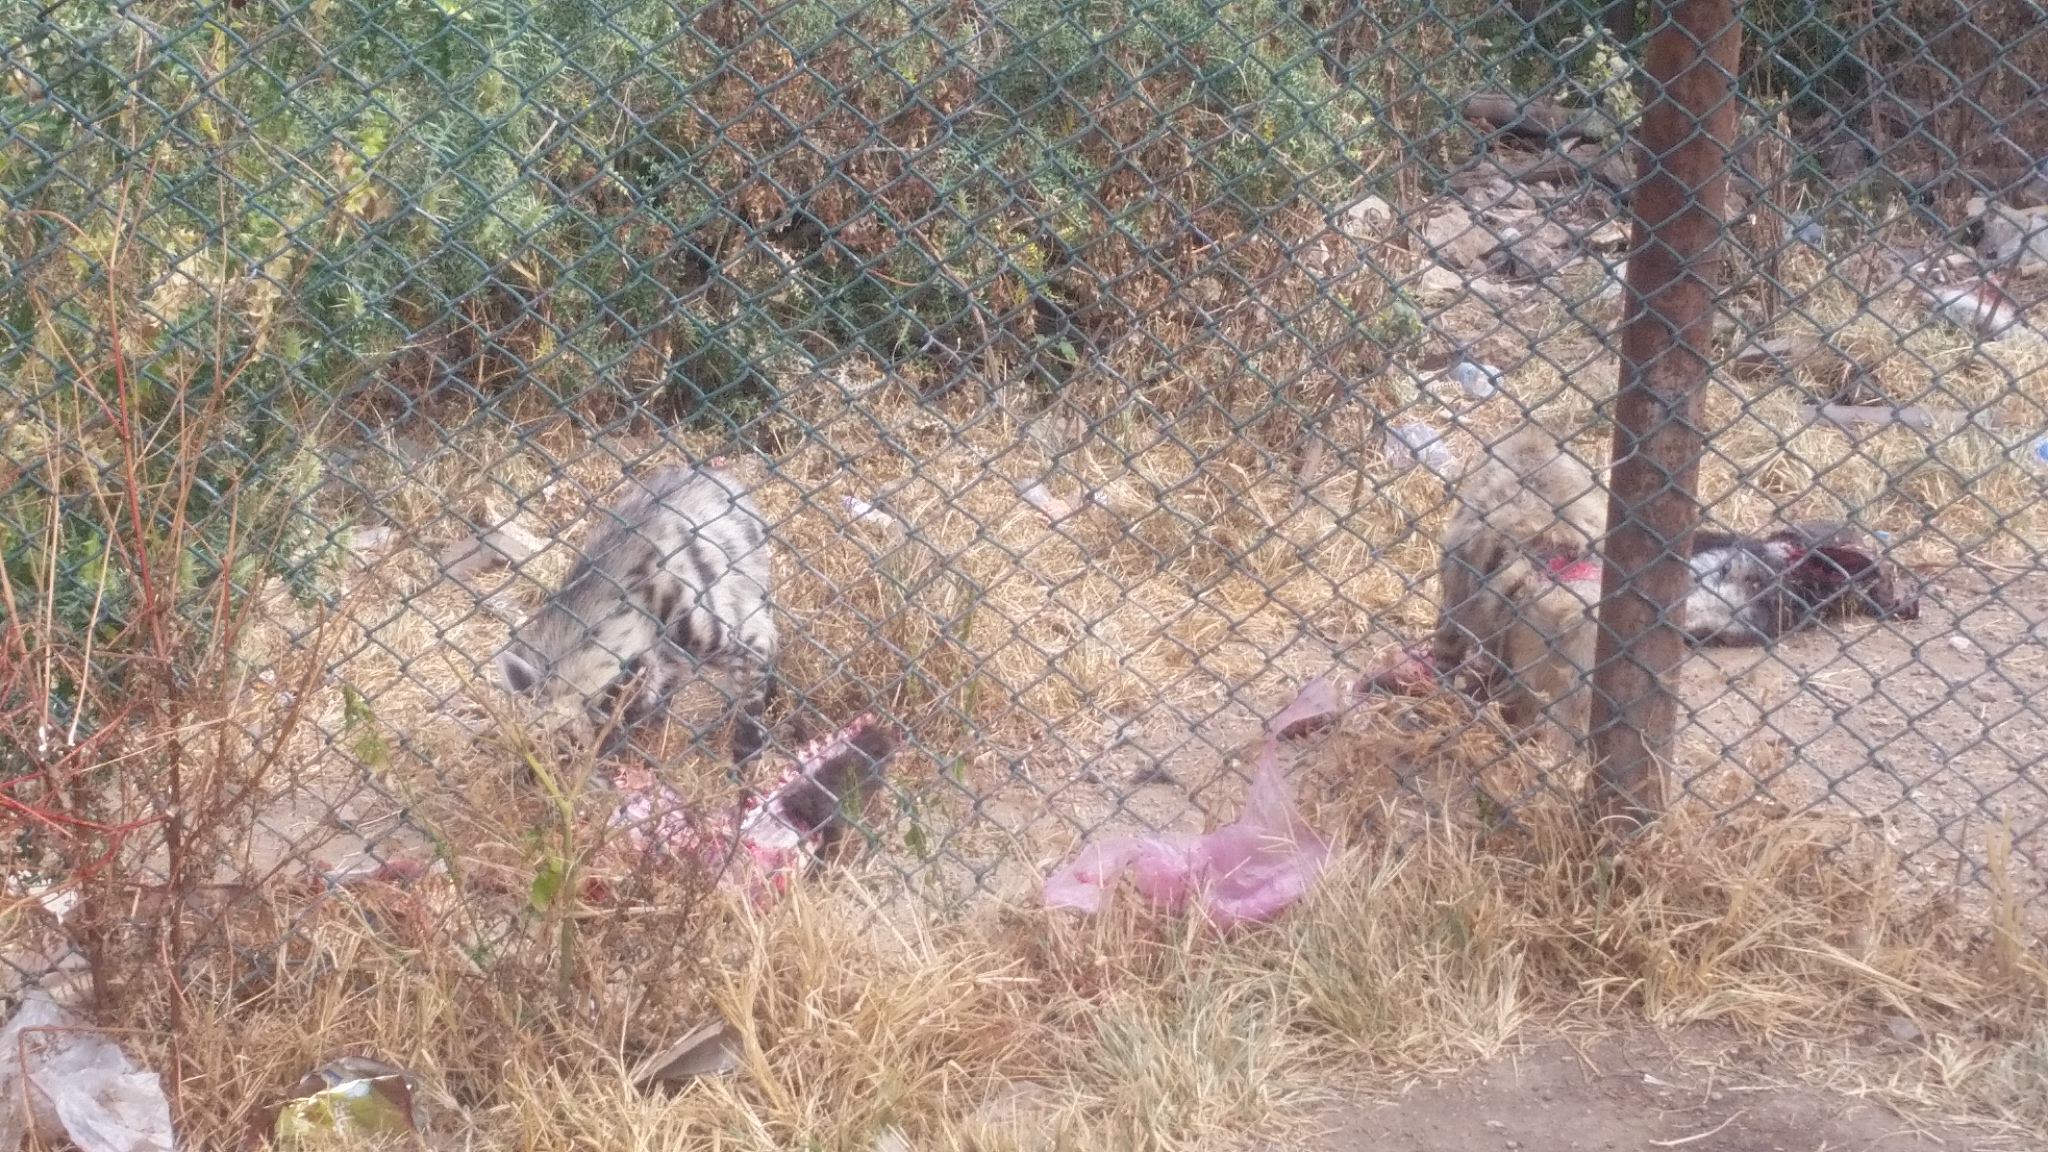 ibb zoo the other 2 Hyenas eating OWAPAR's delivery 7 NOV 2018 yemen zoo rescue.jpg